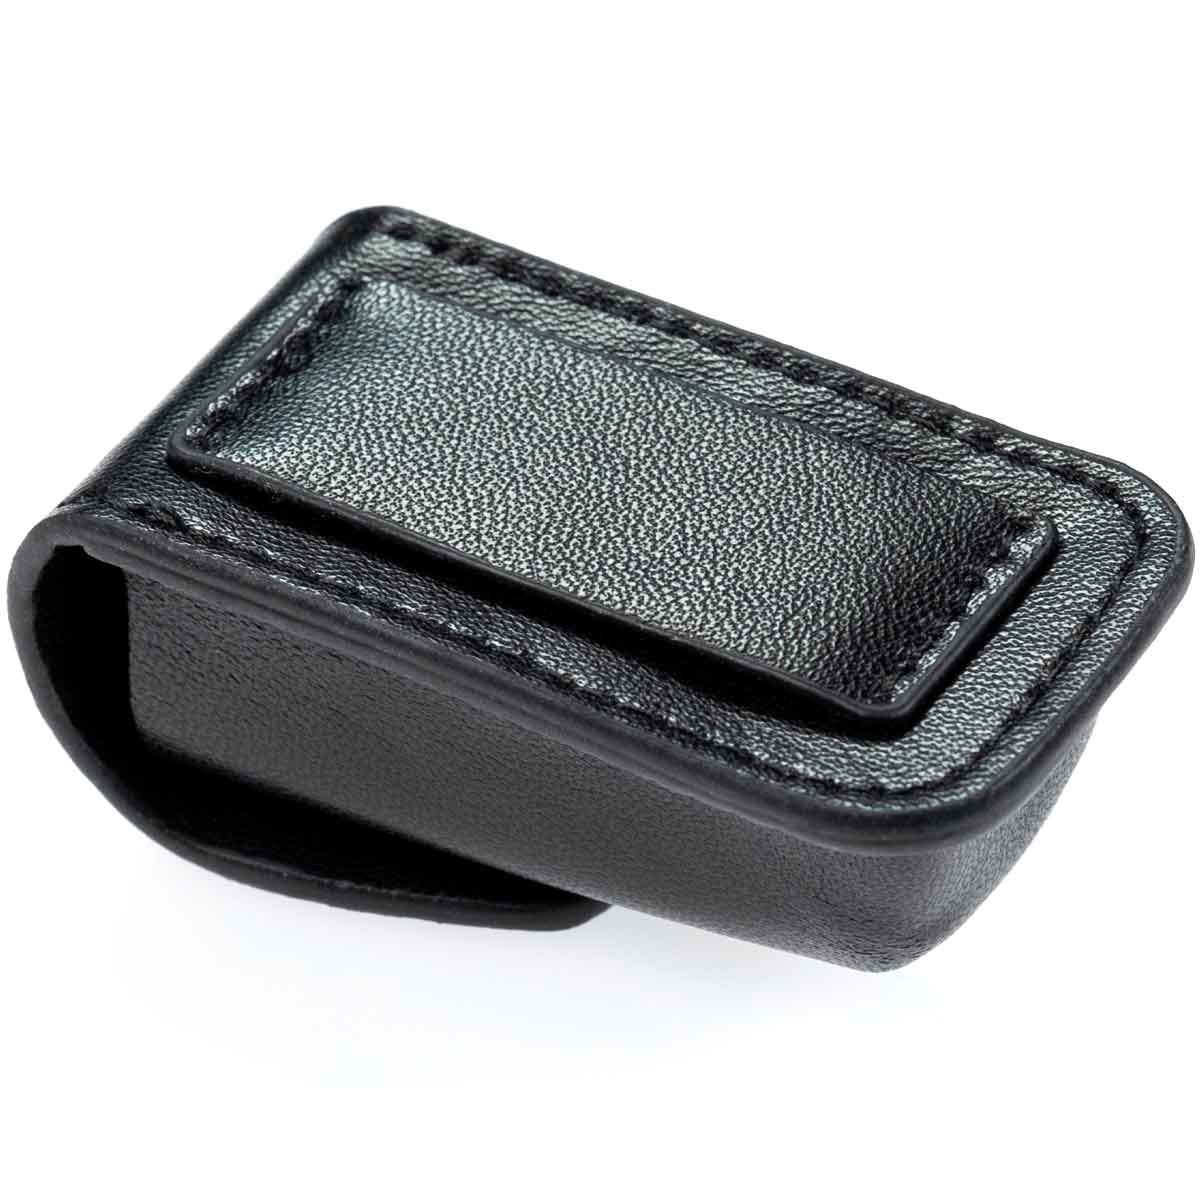 iFi GO Bar Portable Headphone Amp & DAC - bottom view of carrying case